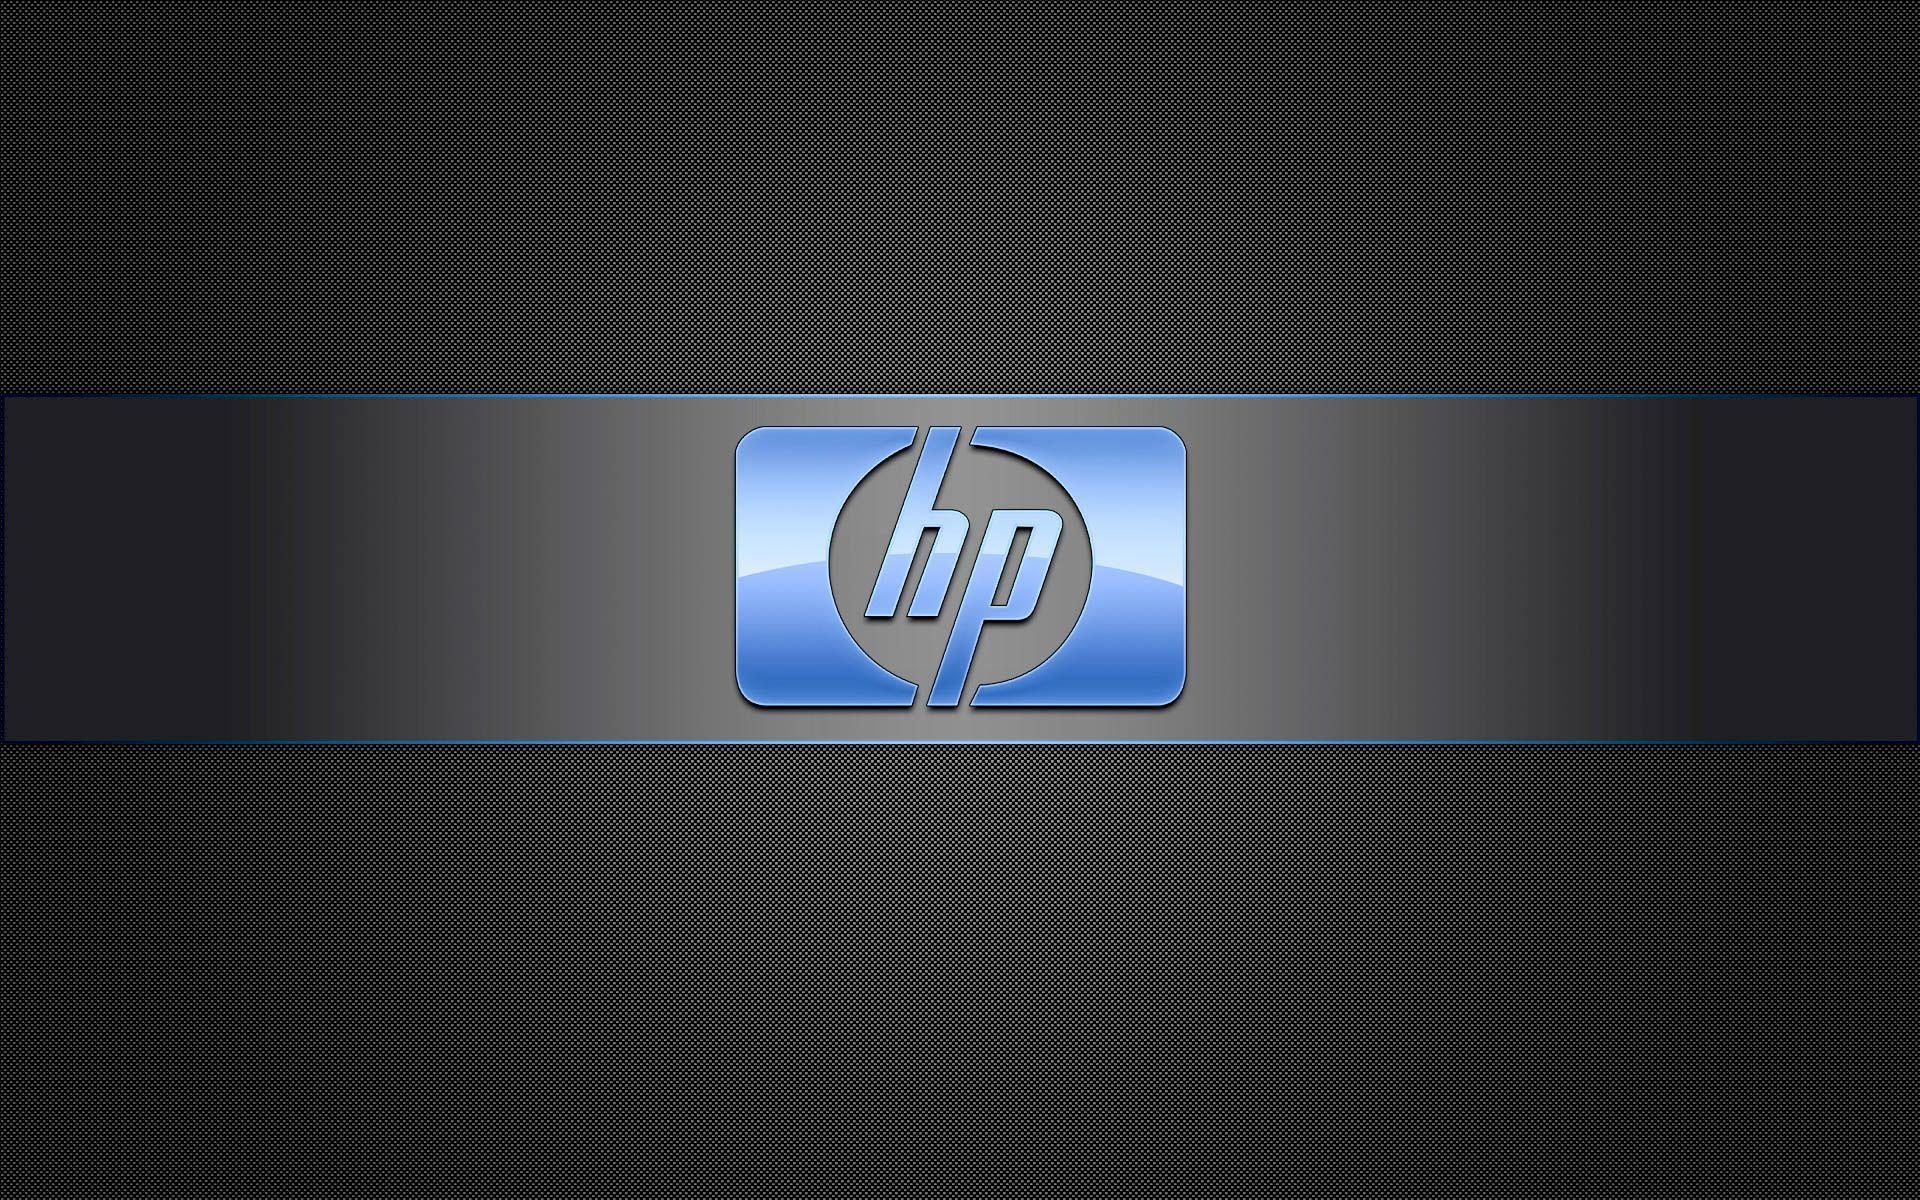 Hewlett Packard HD Picture & HD Wallpaper In High QUlaity HD